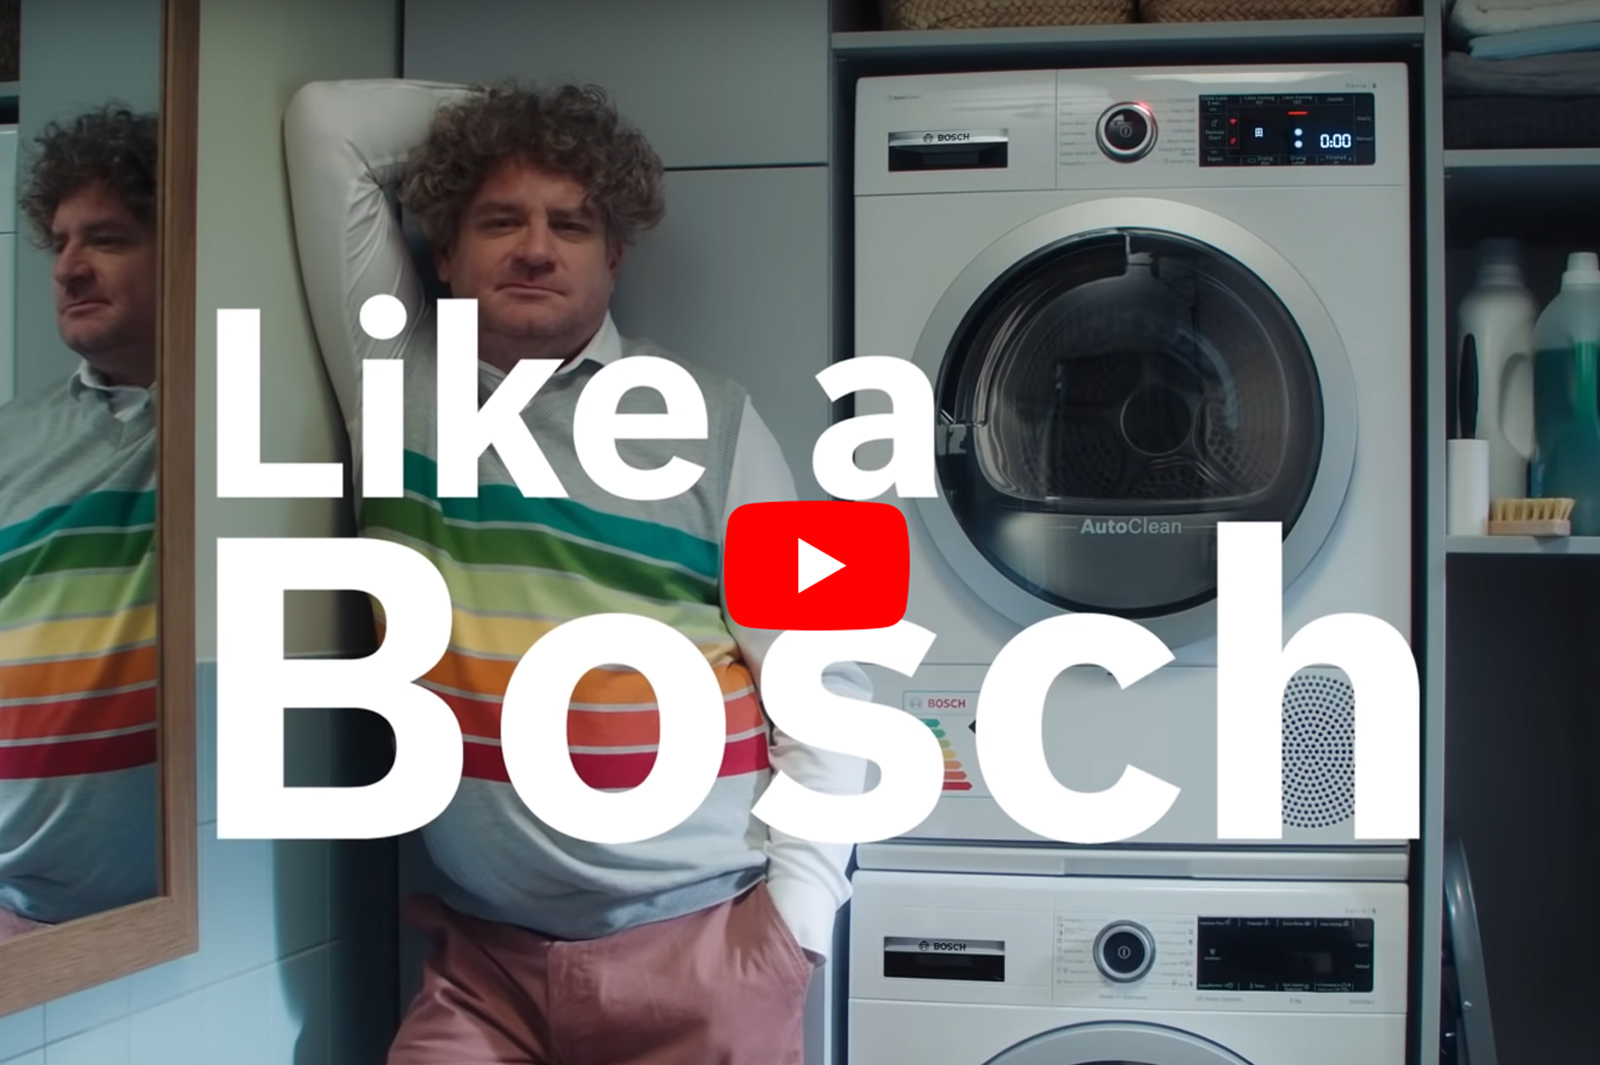 youtube marketing success story brand building Bosch BSH